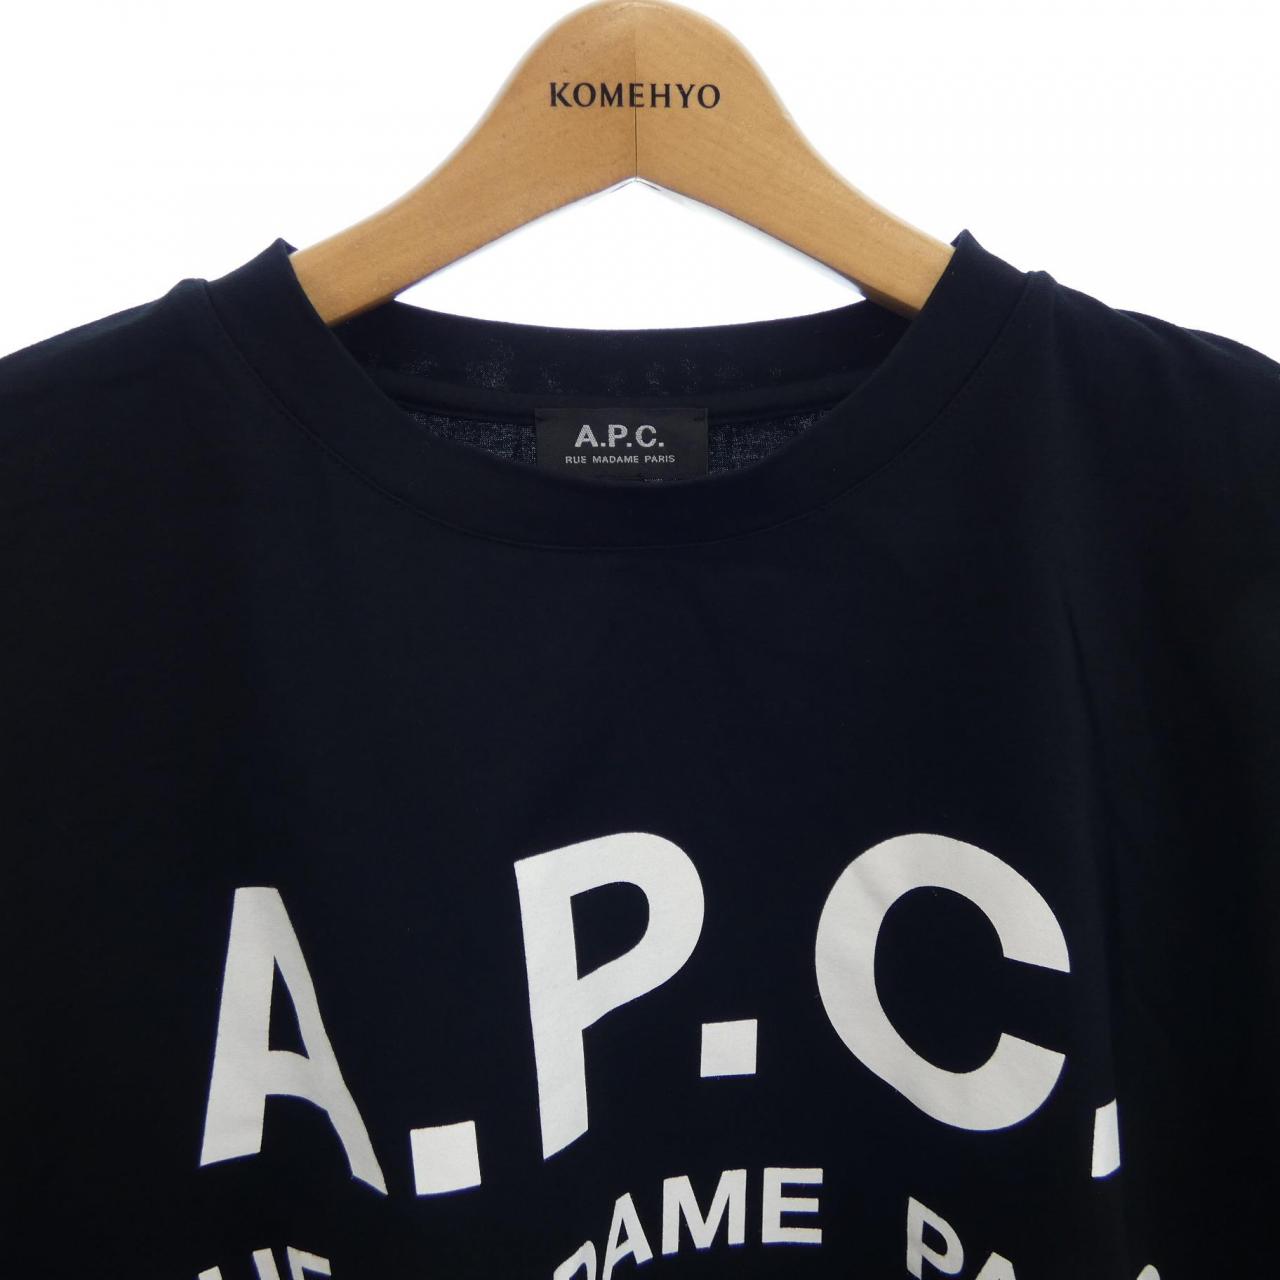 A.P.C. APC T-shirt